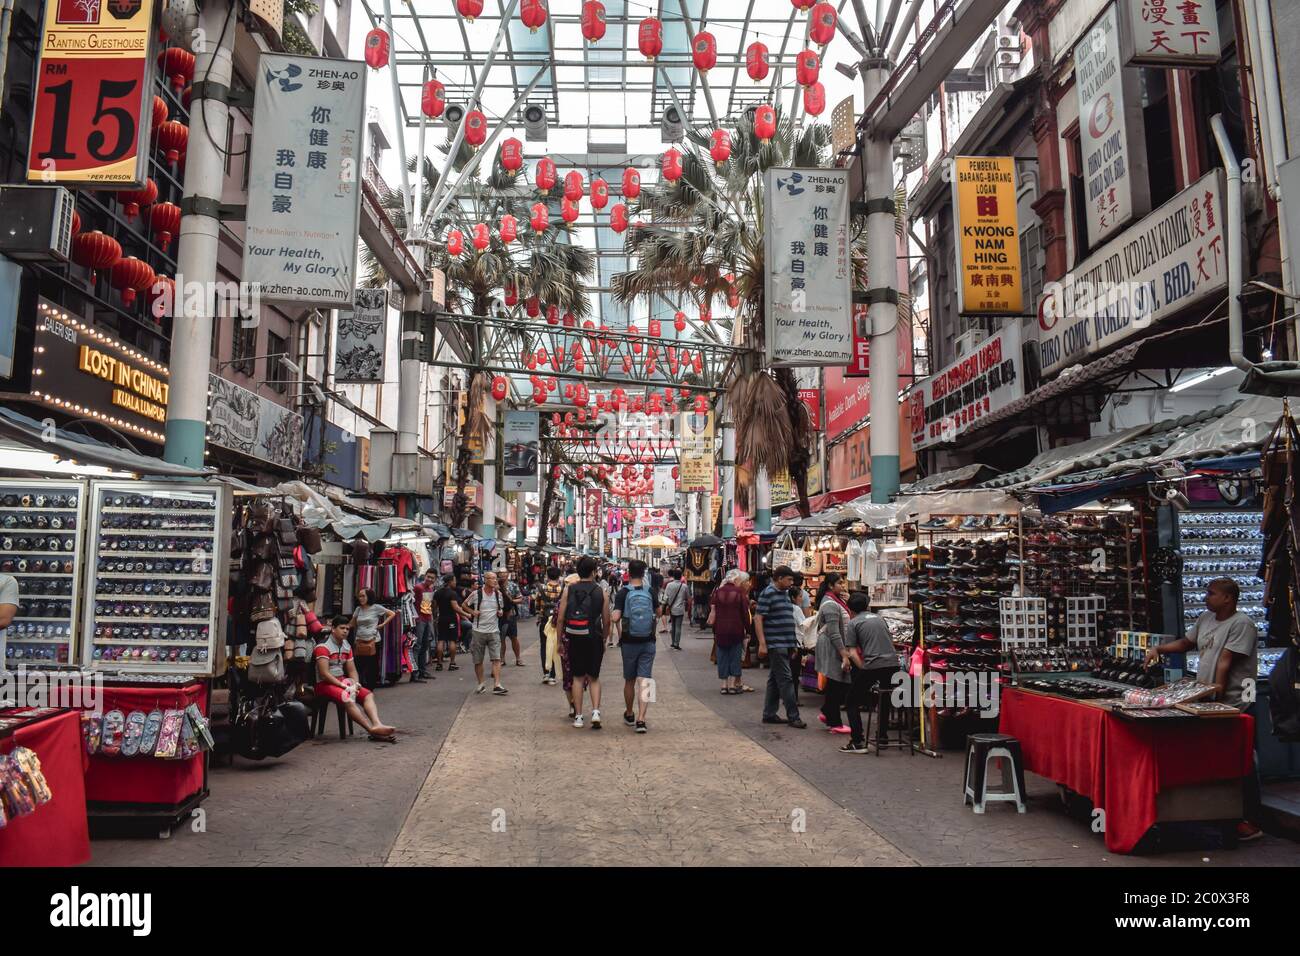 People walking on a Street Market in Petaling street in Chinese town in Kuala Lumpur Malaysia Stock Photo